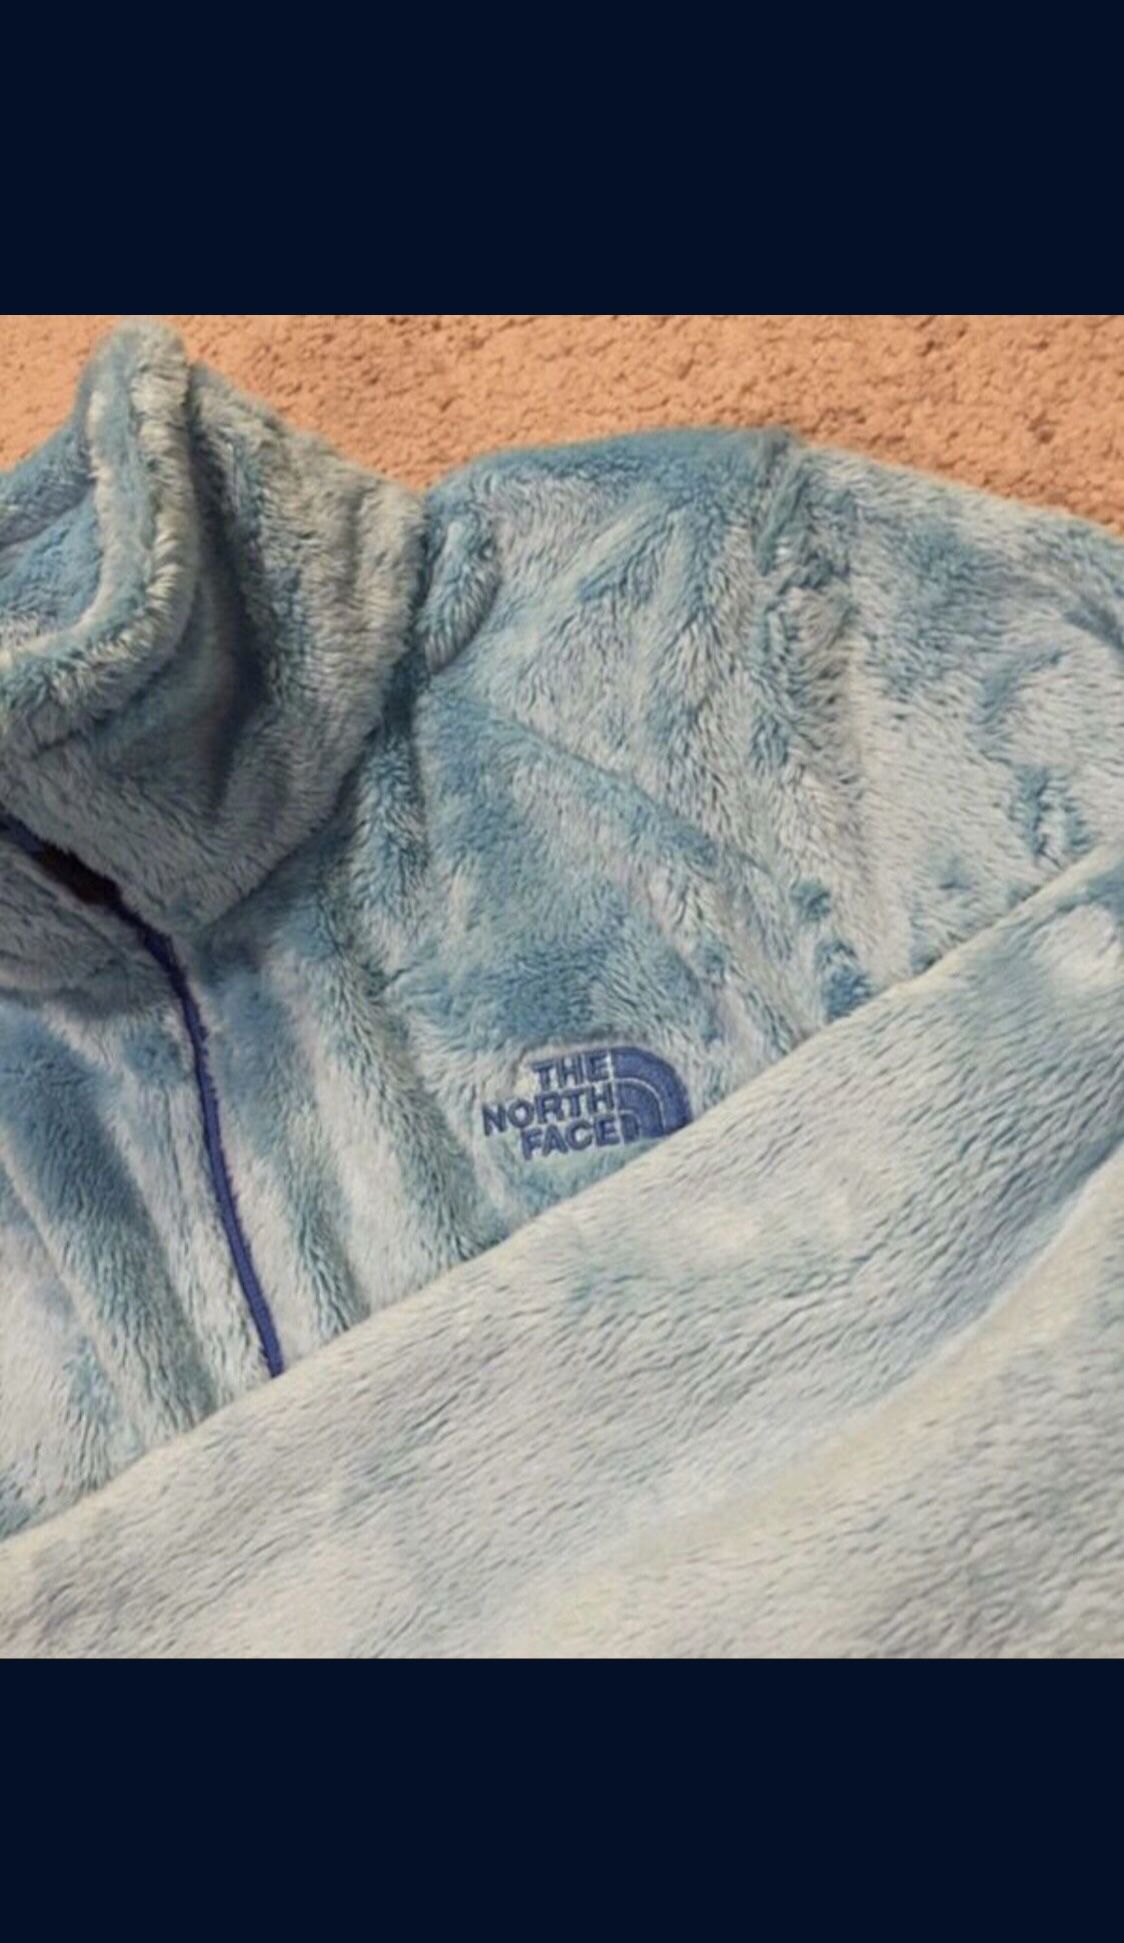 North Face / Soft Cozy Fuzzy Fleece Sweatshirt Jacket Coat / SIZE: Women's X-Large / Brand New w/o Tags! / Baby Blue Dream